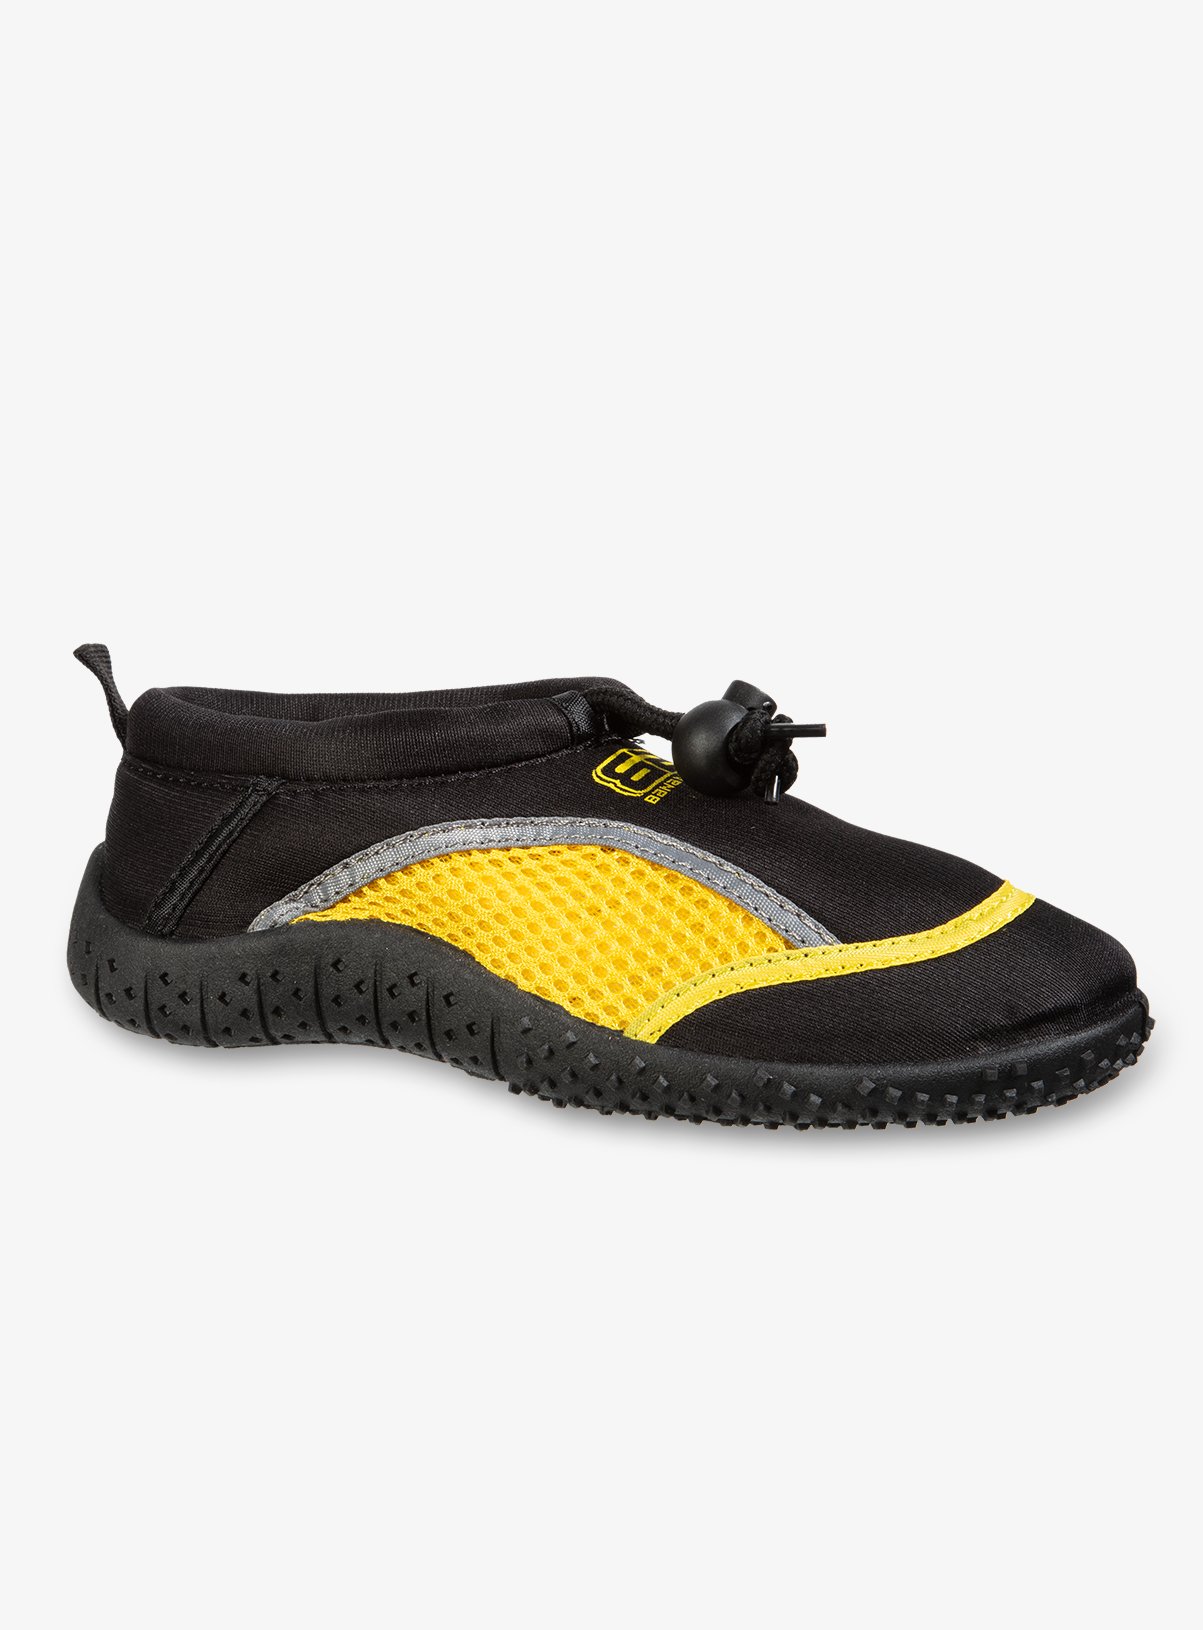 BANANA BITE Black & Yellow Wetshoes Review